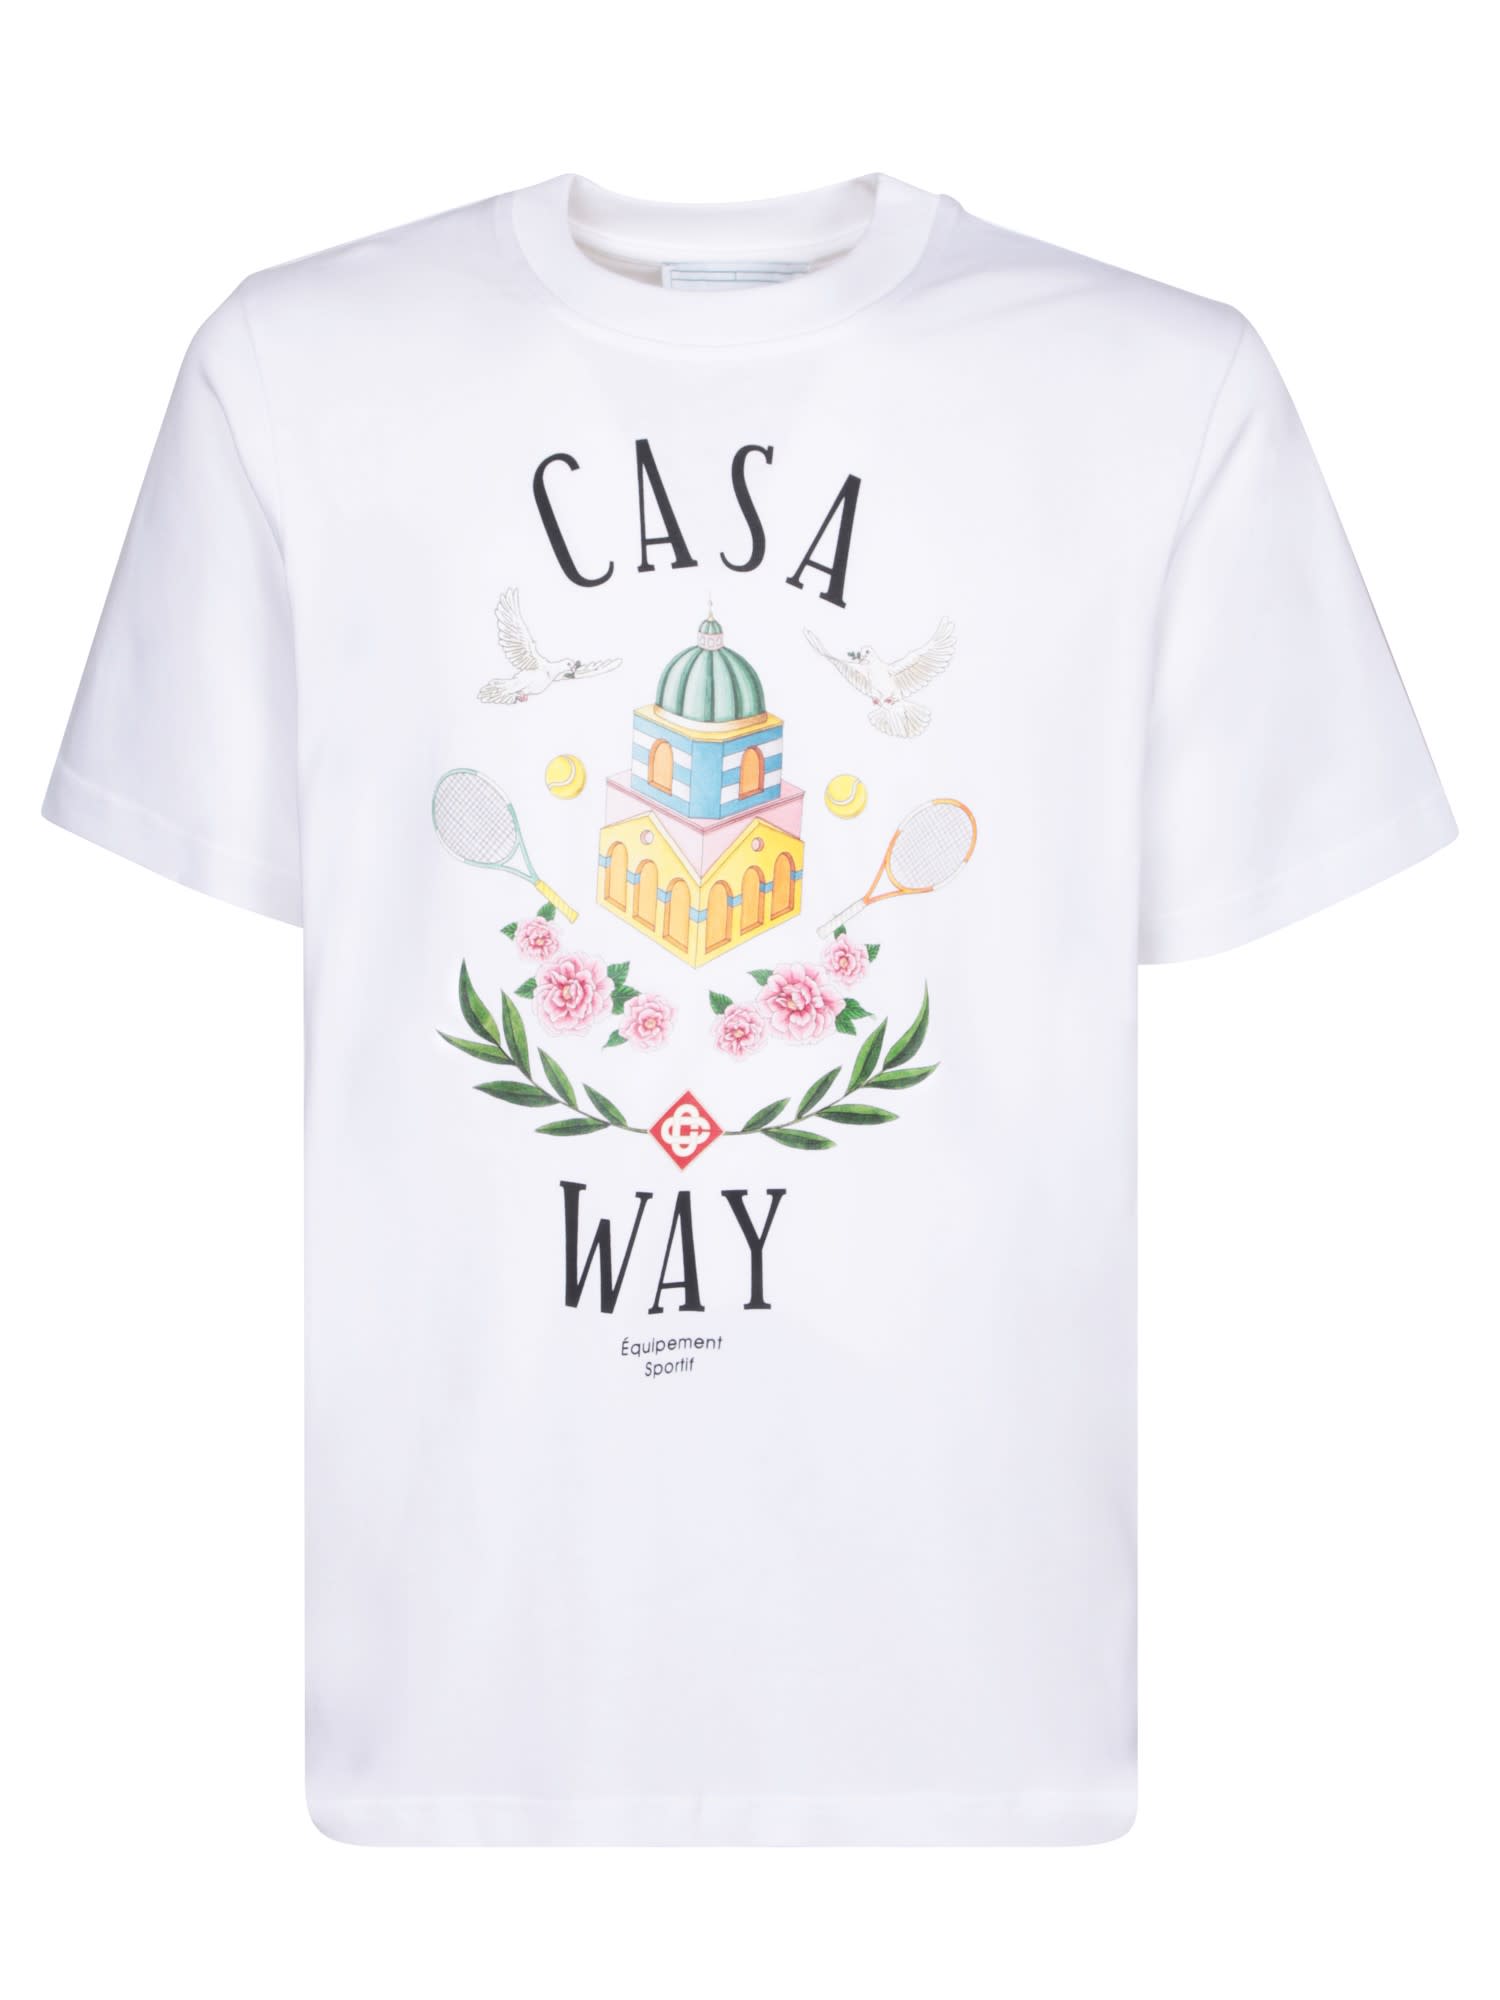 CASABLANCA CASA WAY WHITE T-SHIRT